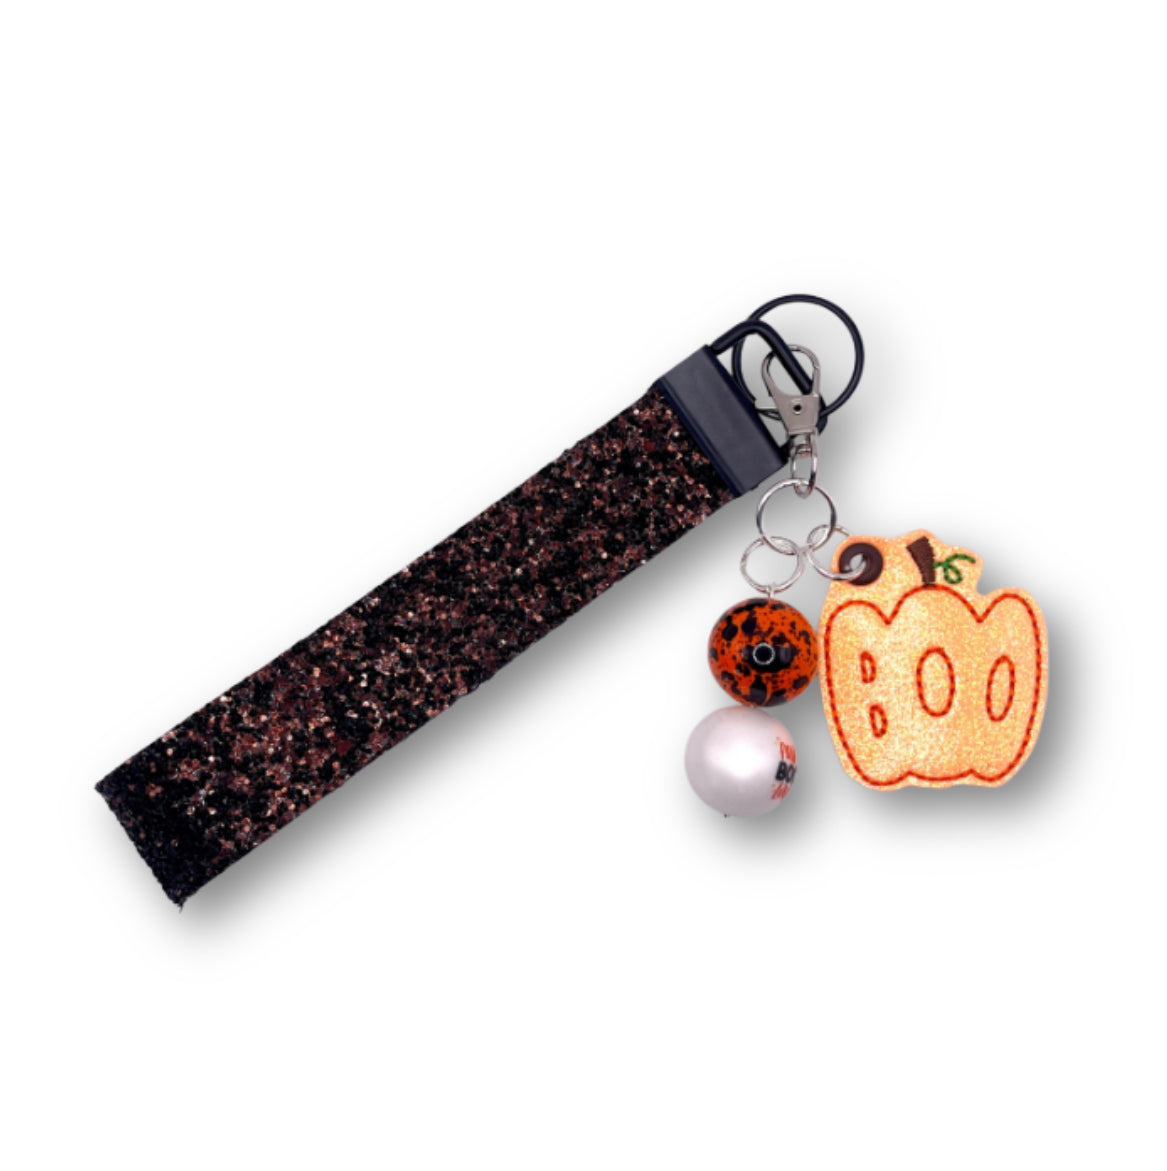 Boo Pumpkin Keychain and Wristlet